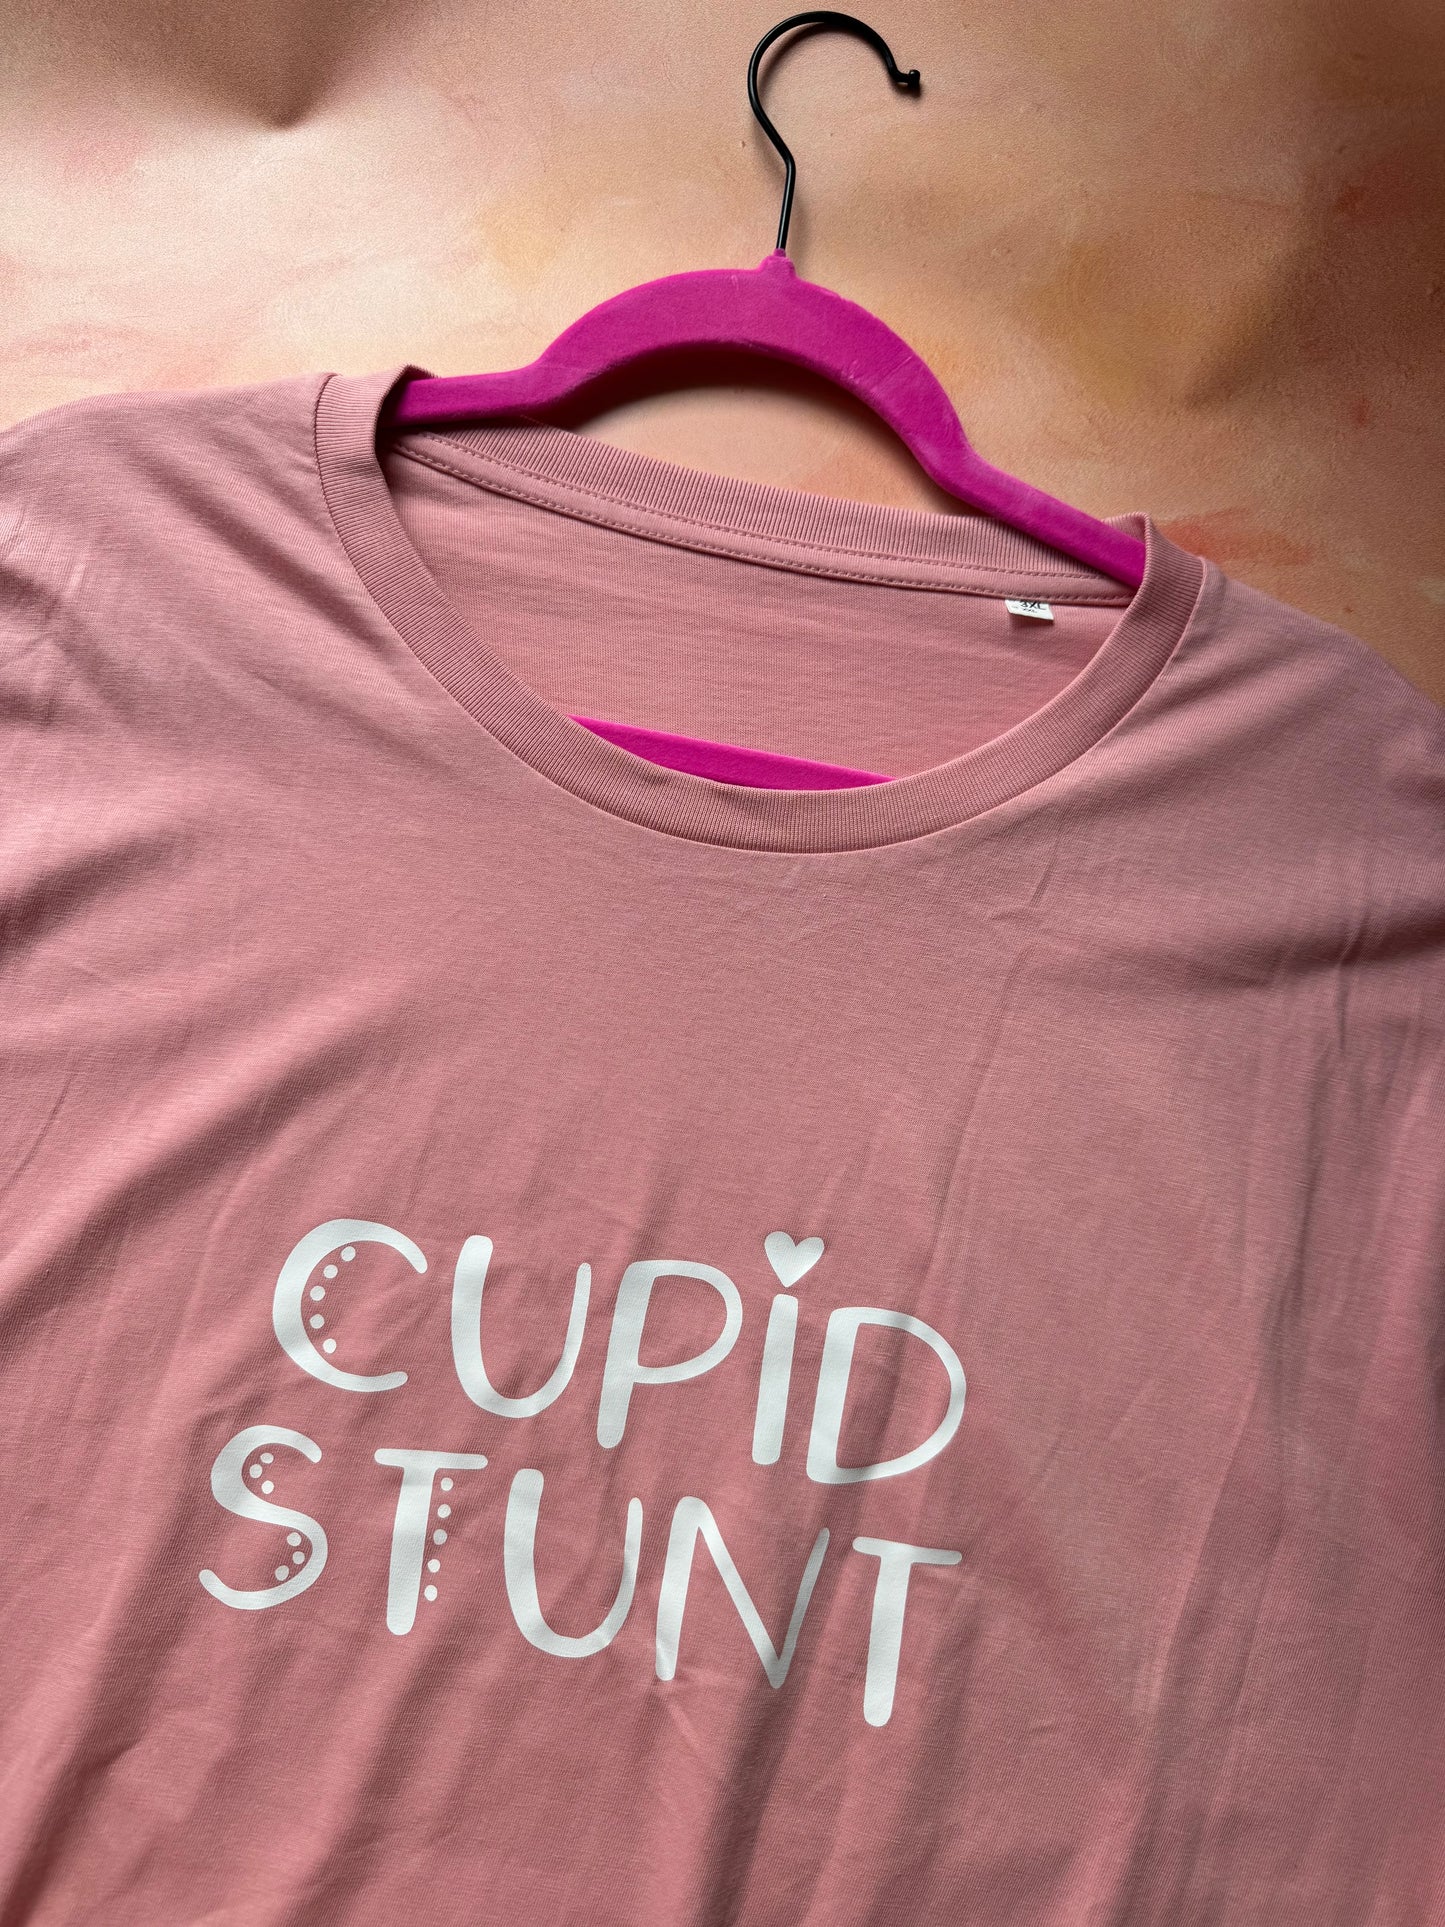 Cupid Stunt - Subtle Sweary Slogan T-shirt